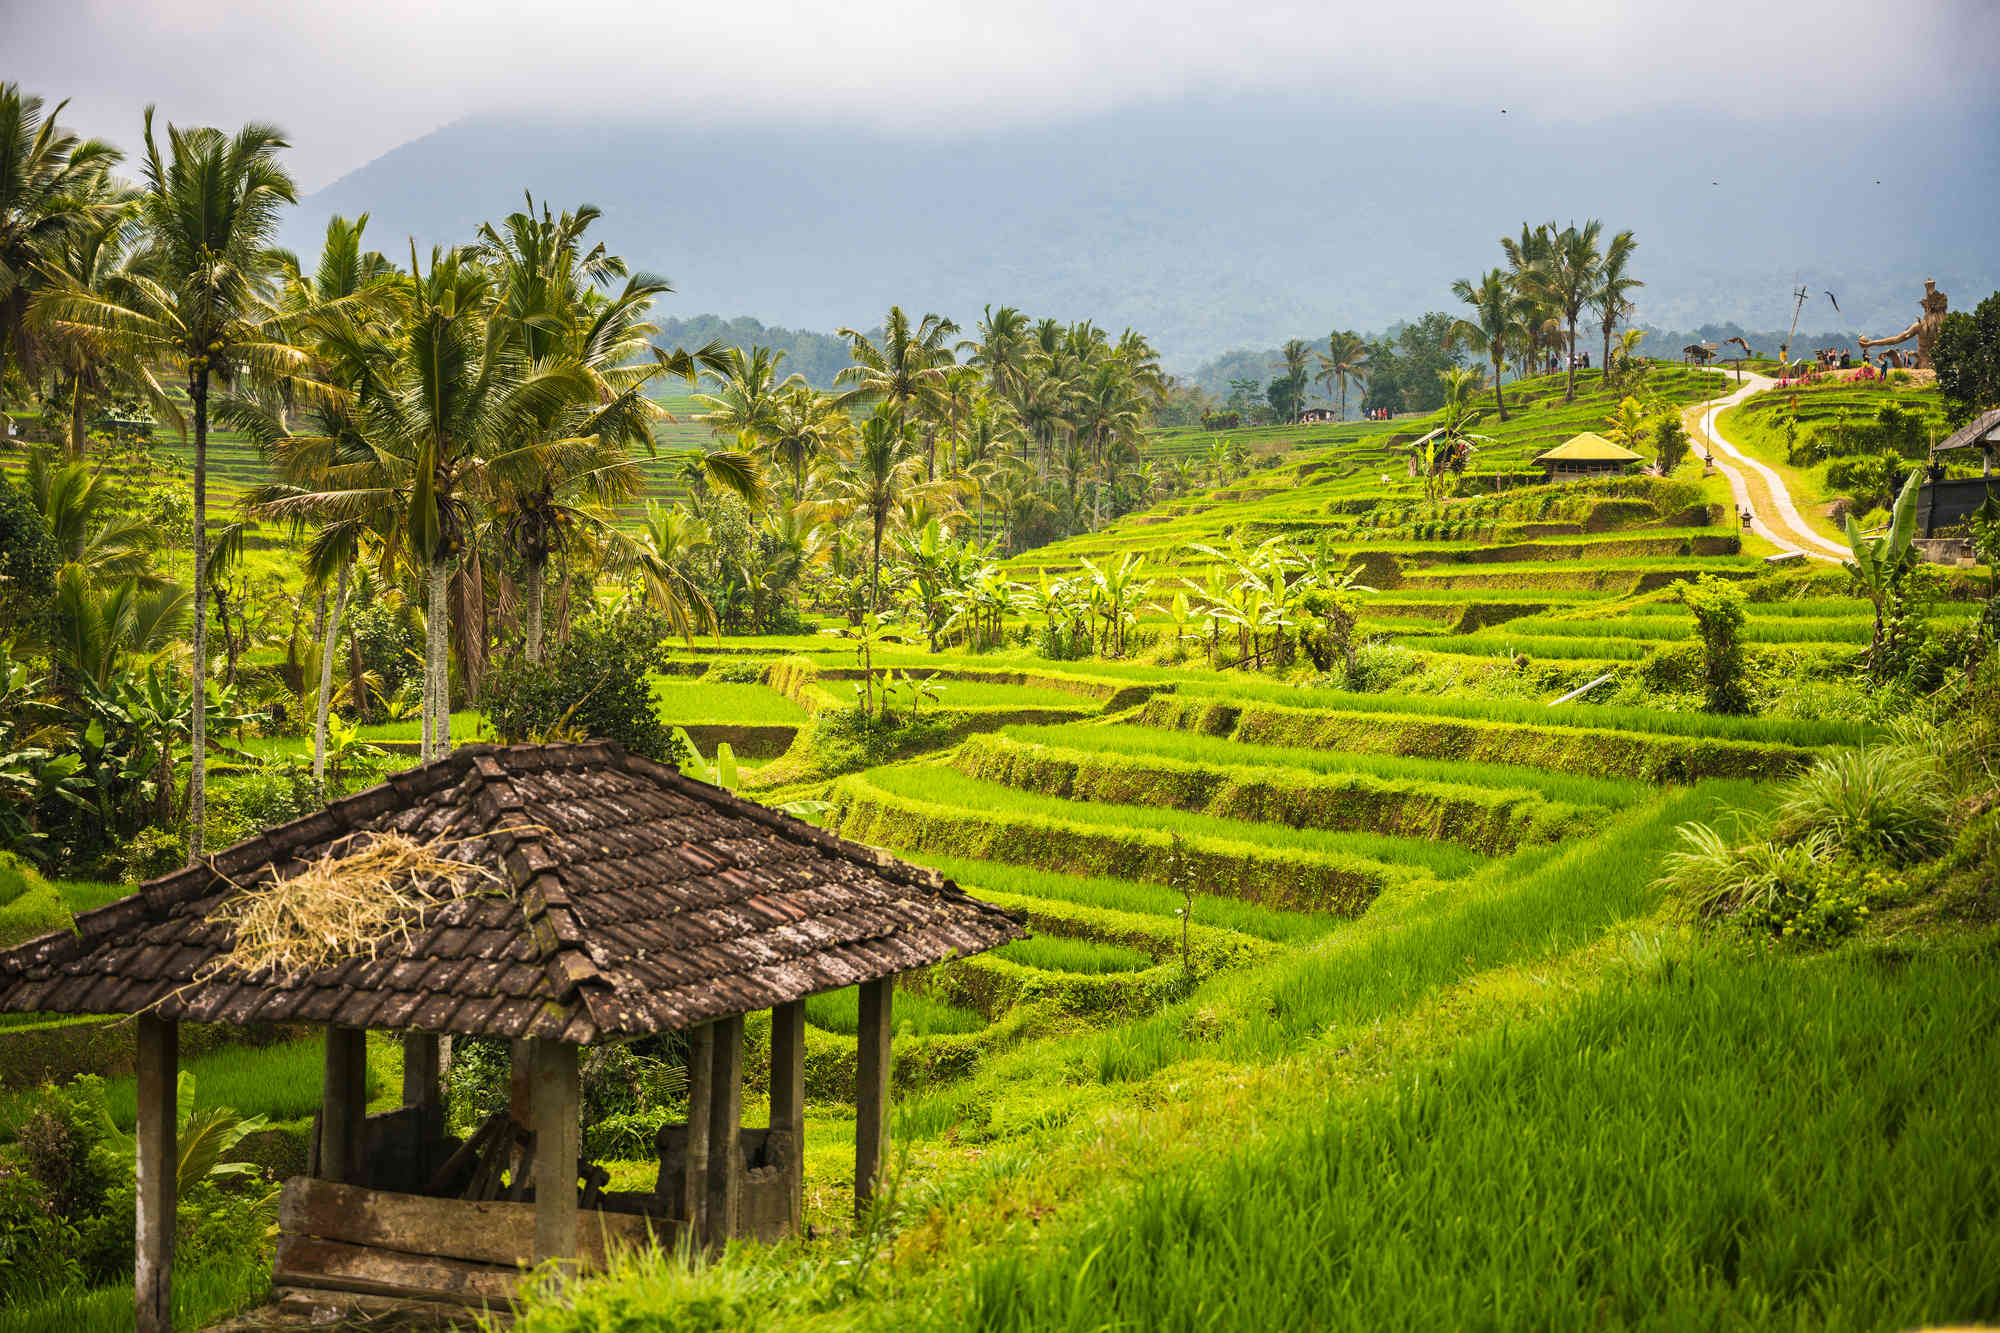 Rice terraces revealed